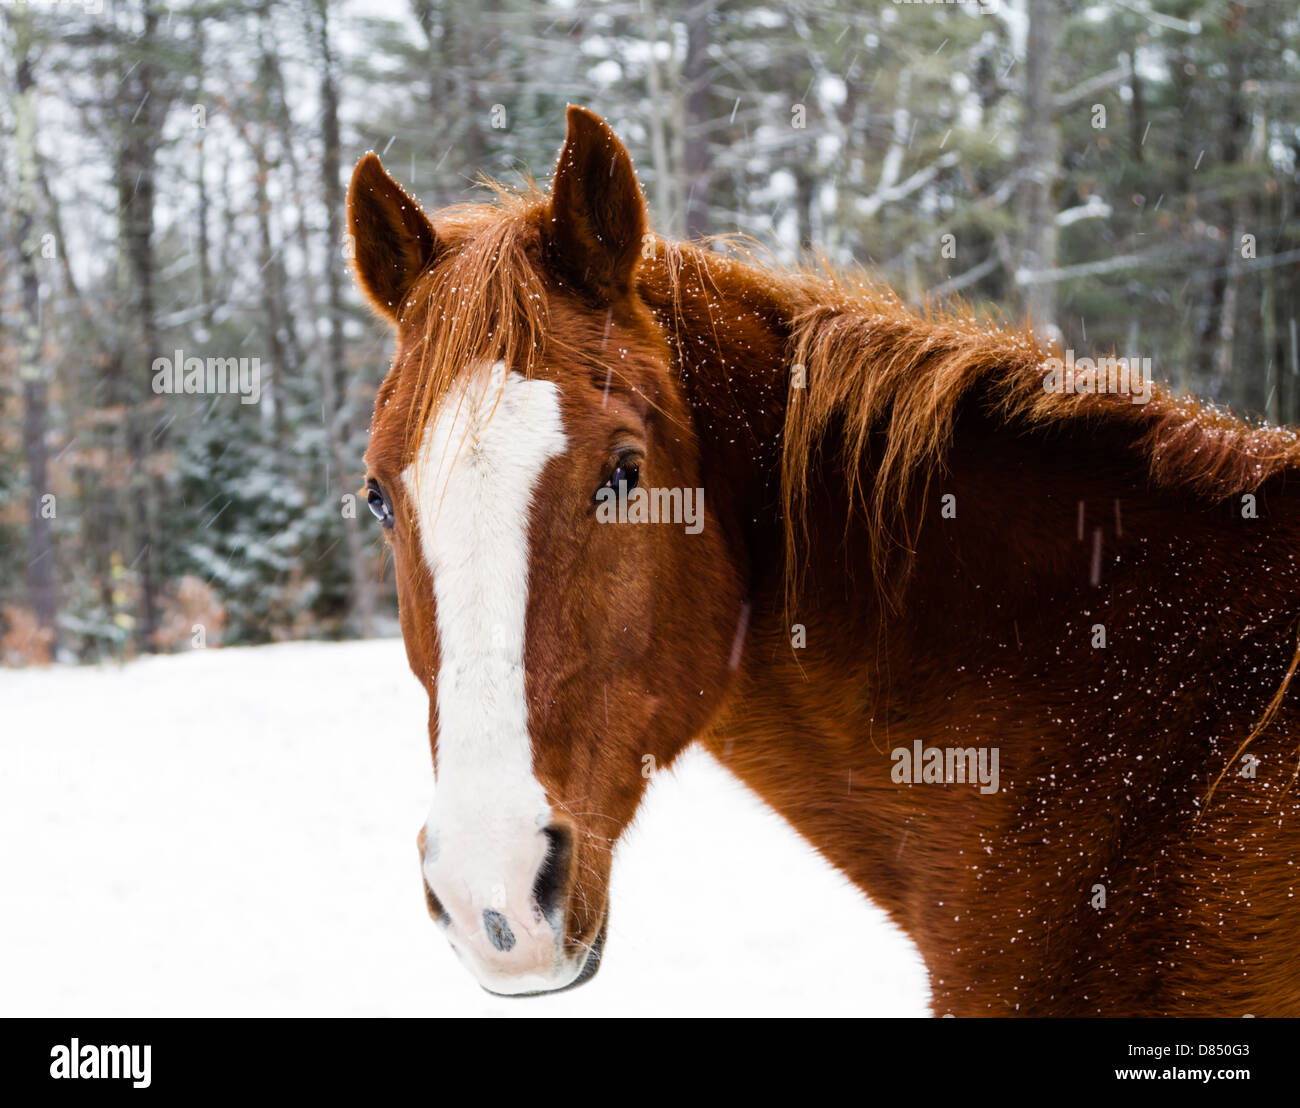 La neve cade su un bel cavallo marrone. Foto Stock